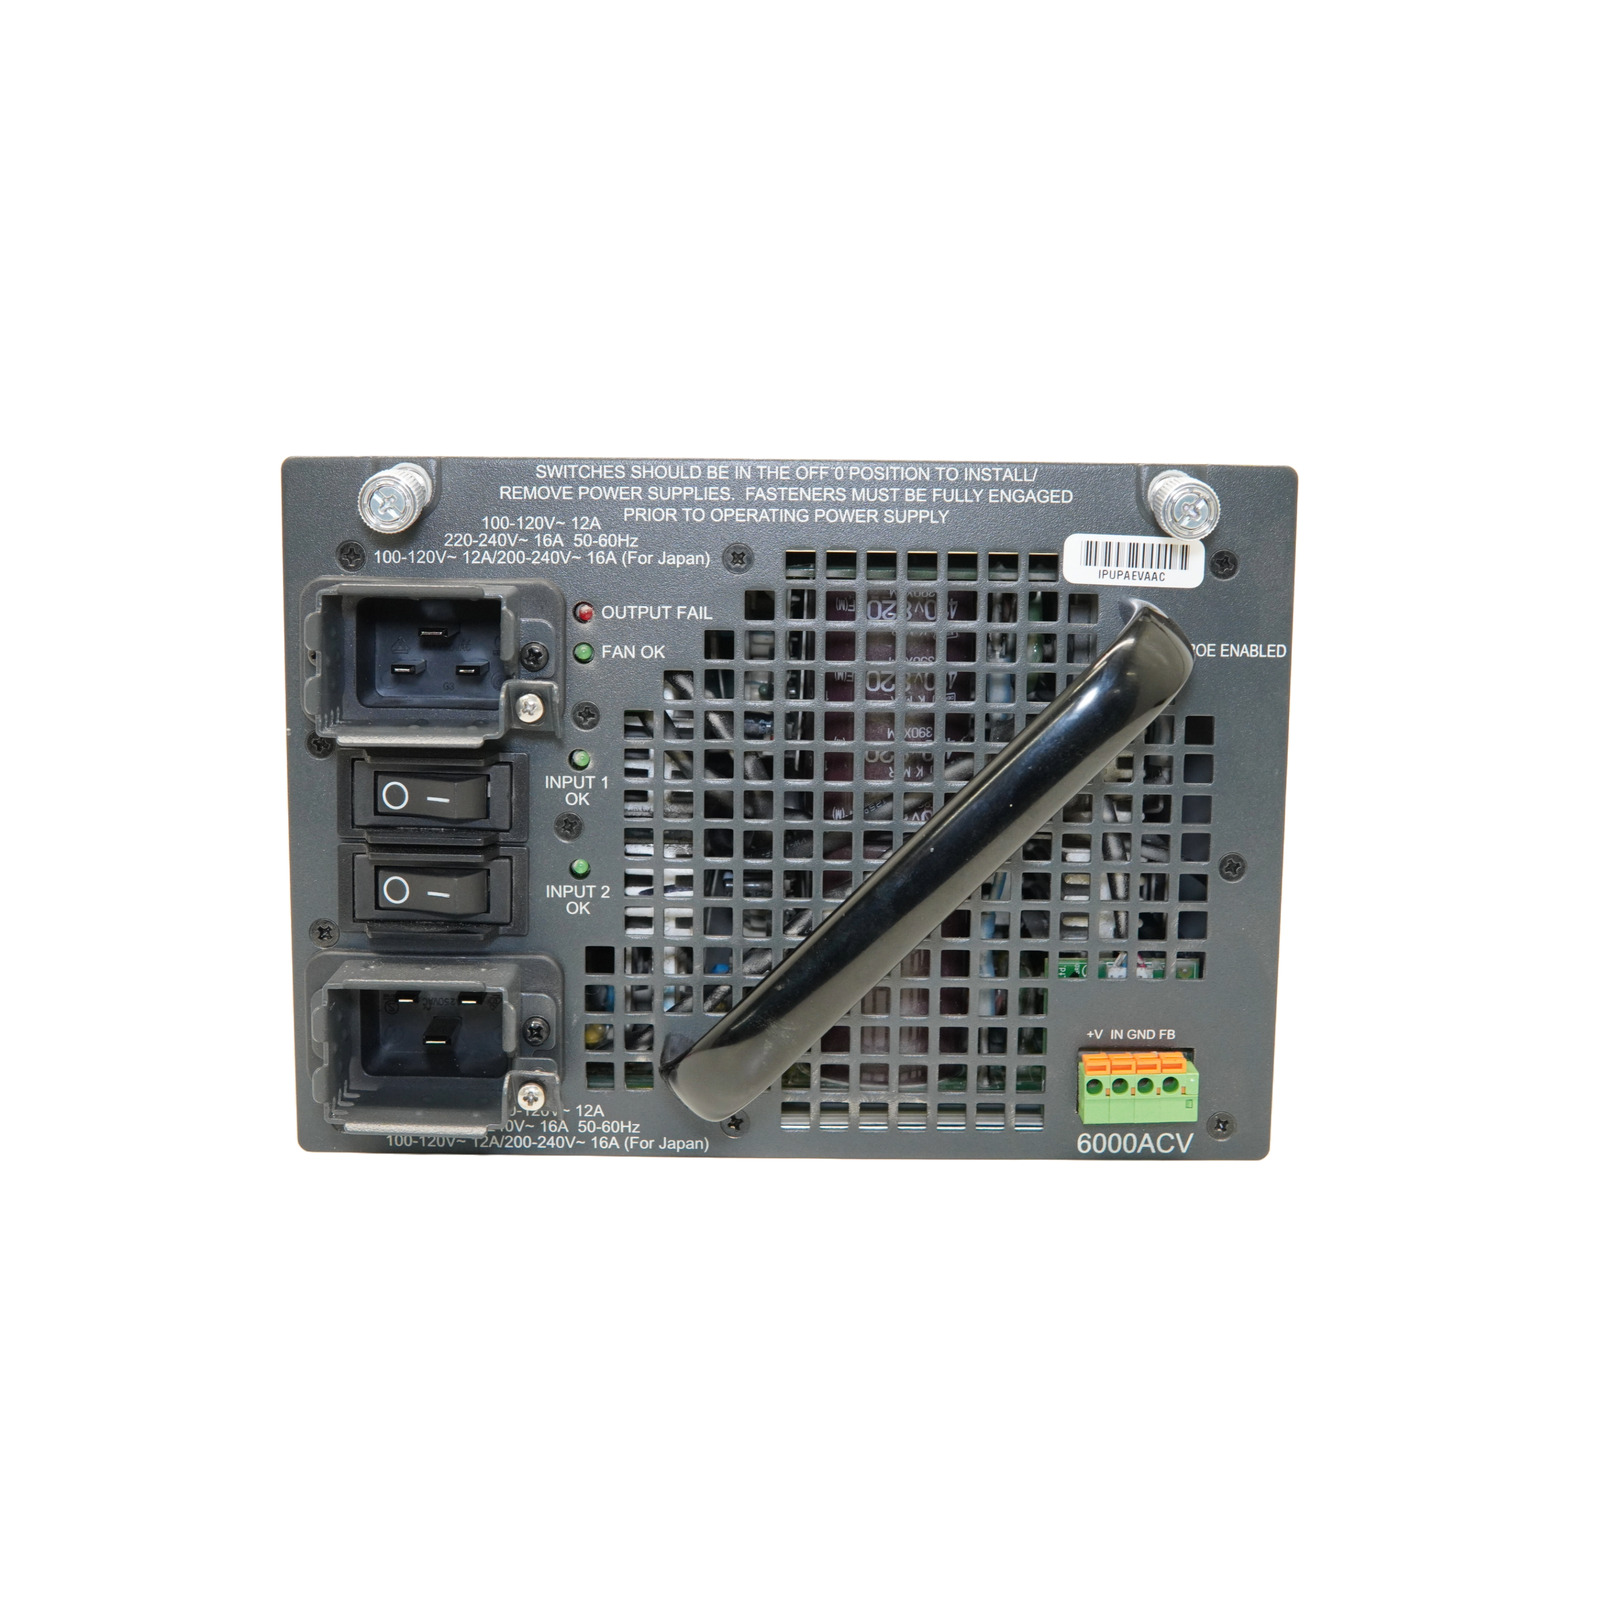 Emerson AA25350 6000 Watt AC Power Supply for Cisco Catalyst 4500